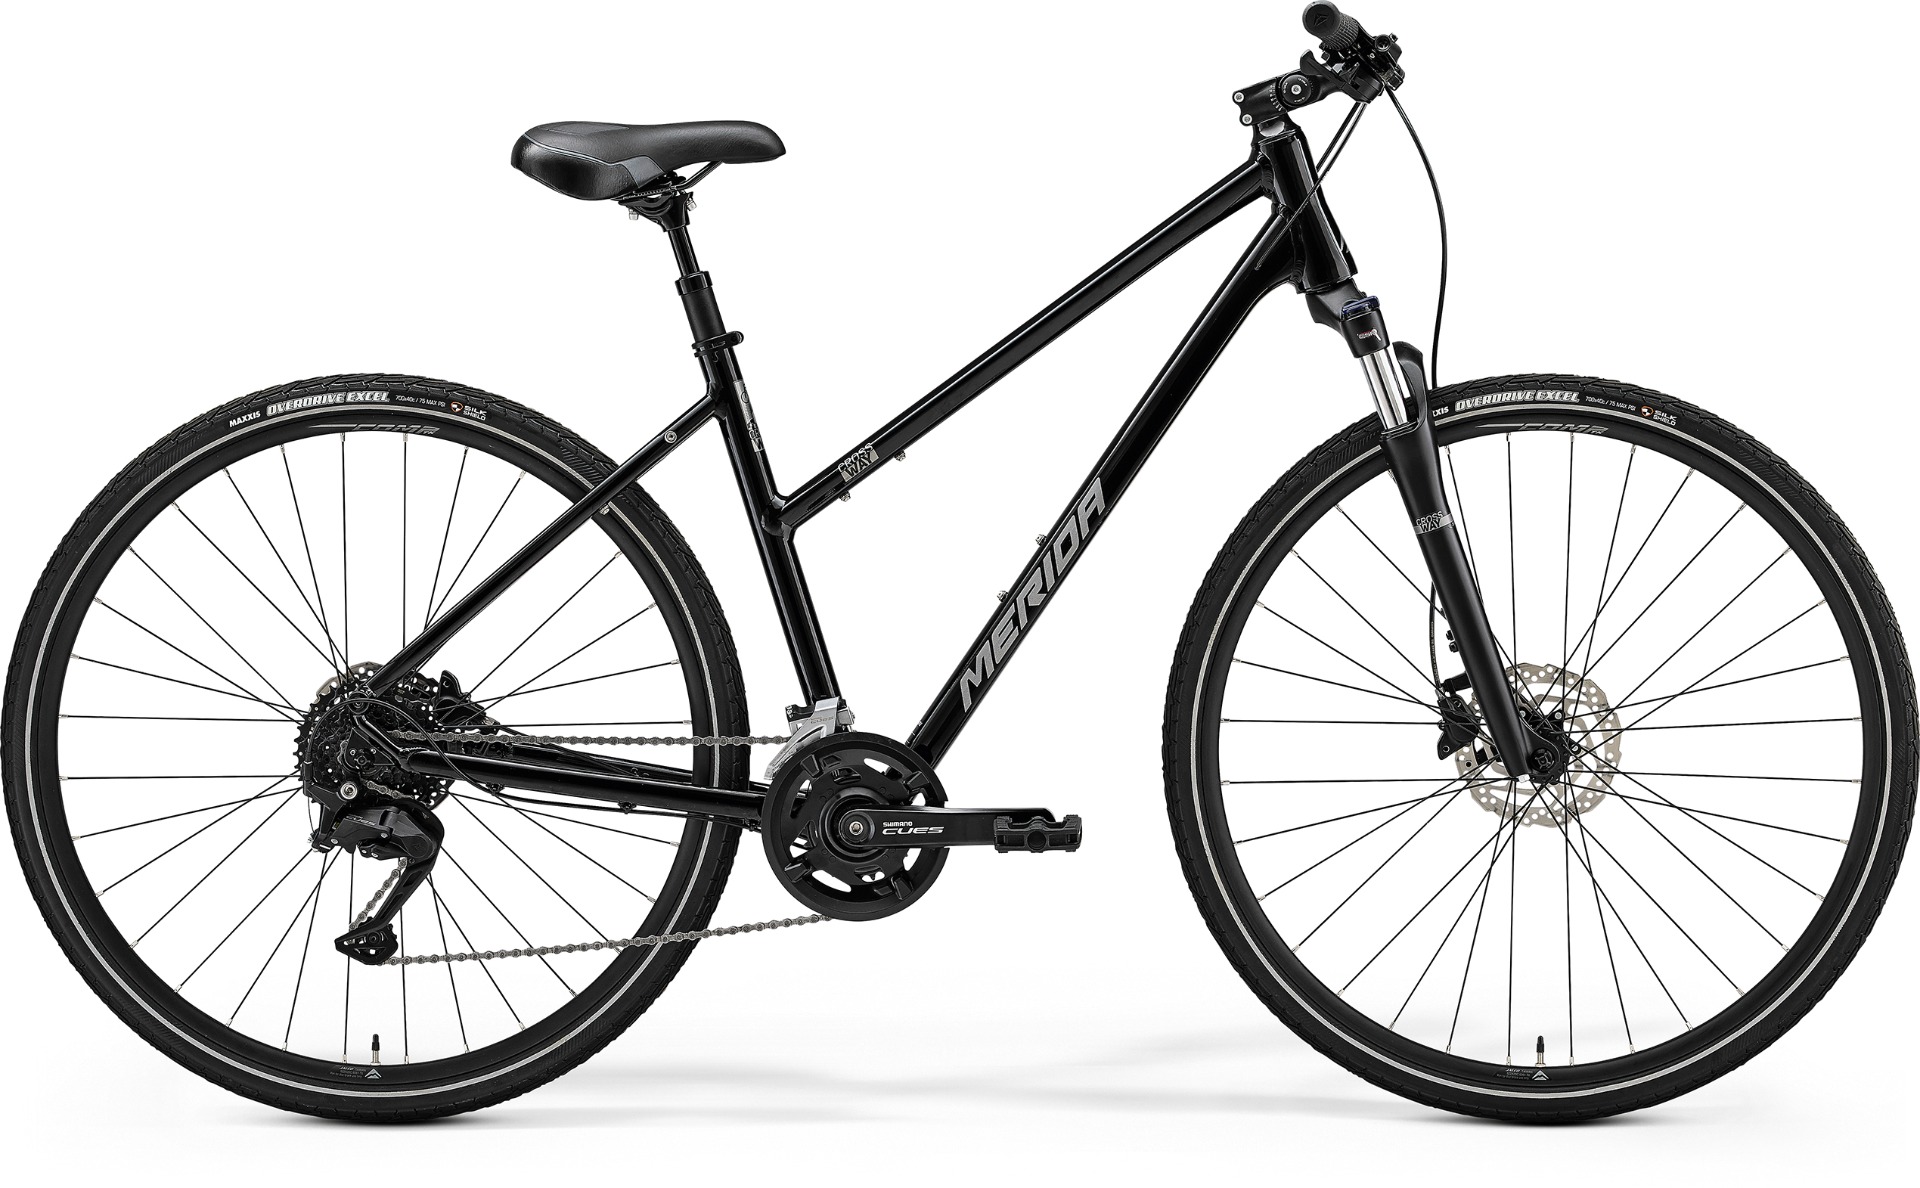 Bicycle Merida CROSSWAY 100 III2 GLOSSY BLACK(SILVER) W